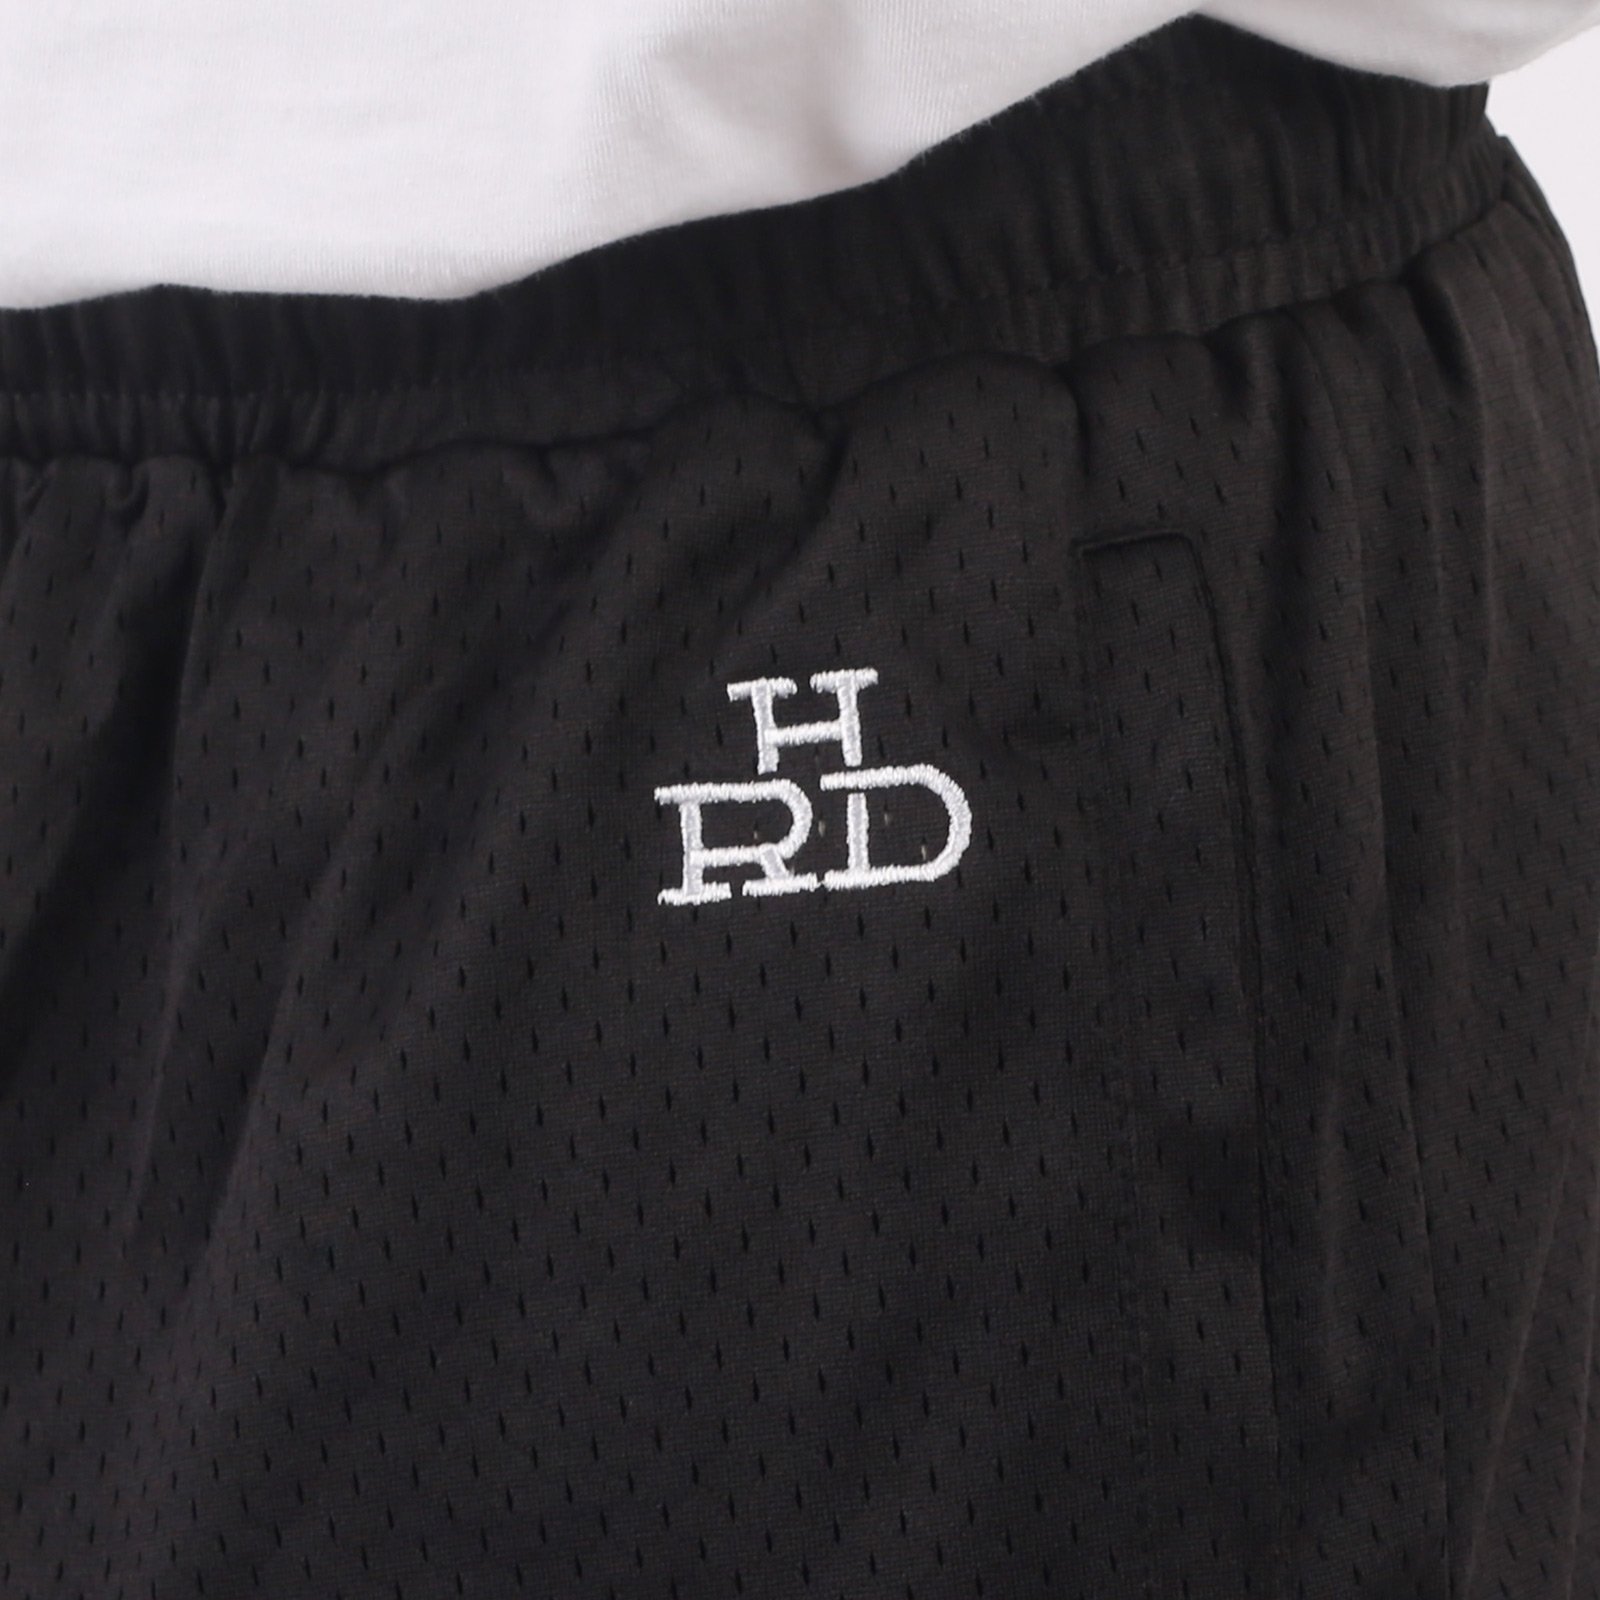 мужские черные шорты  Hard Open Run Open run-blk/wht - цена, описание, фото 5